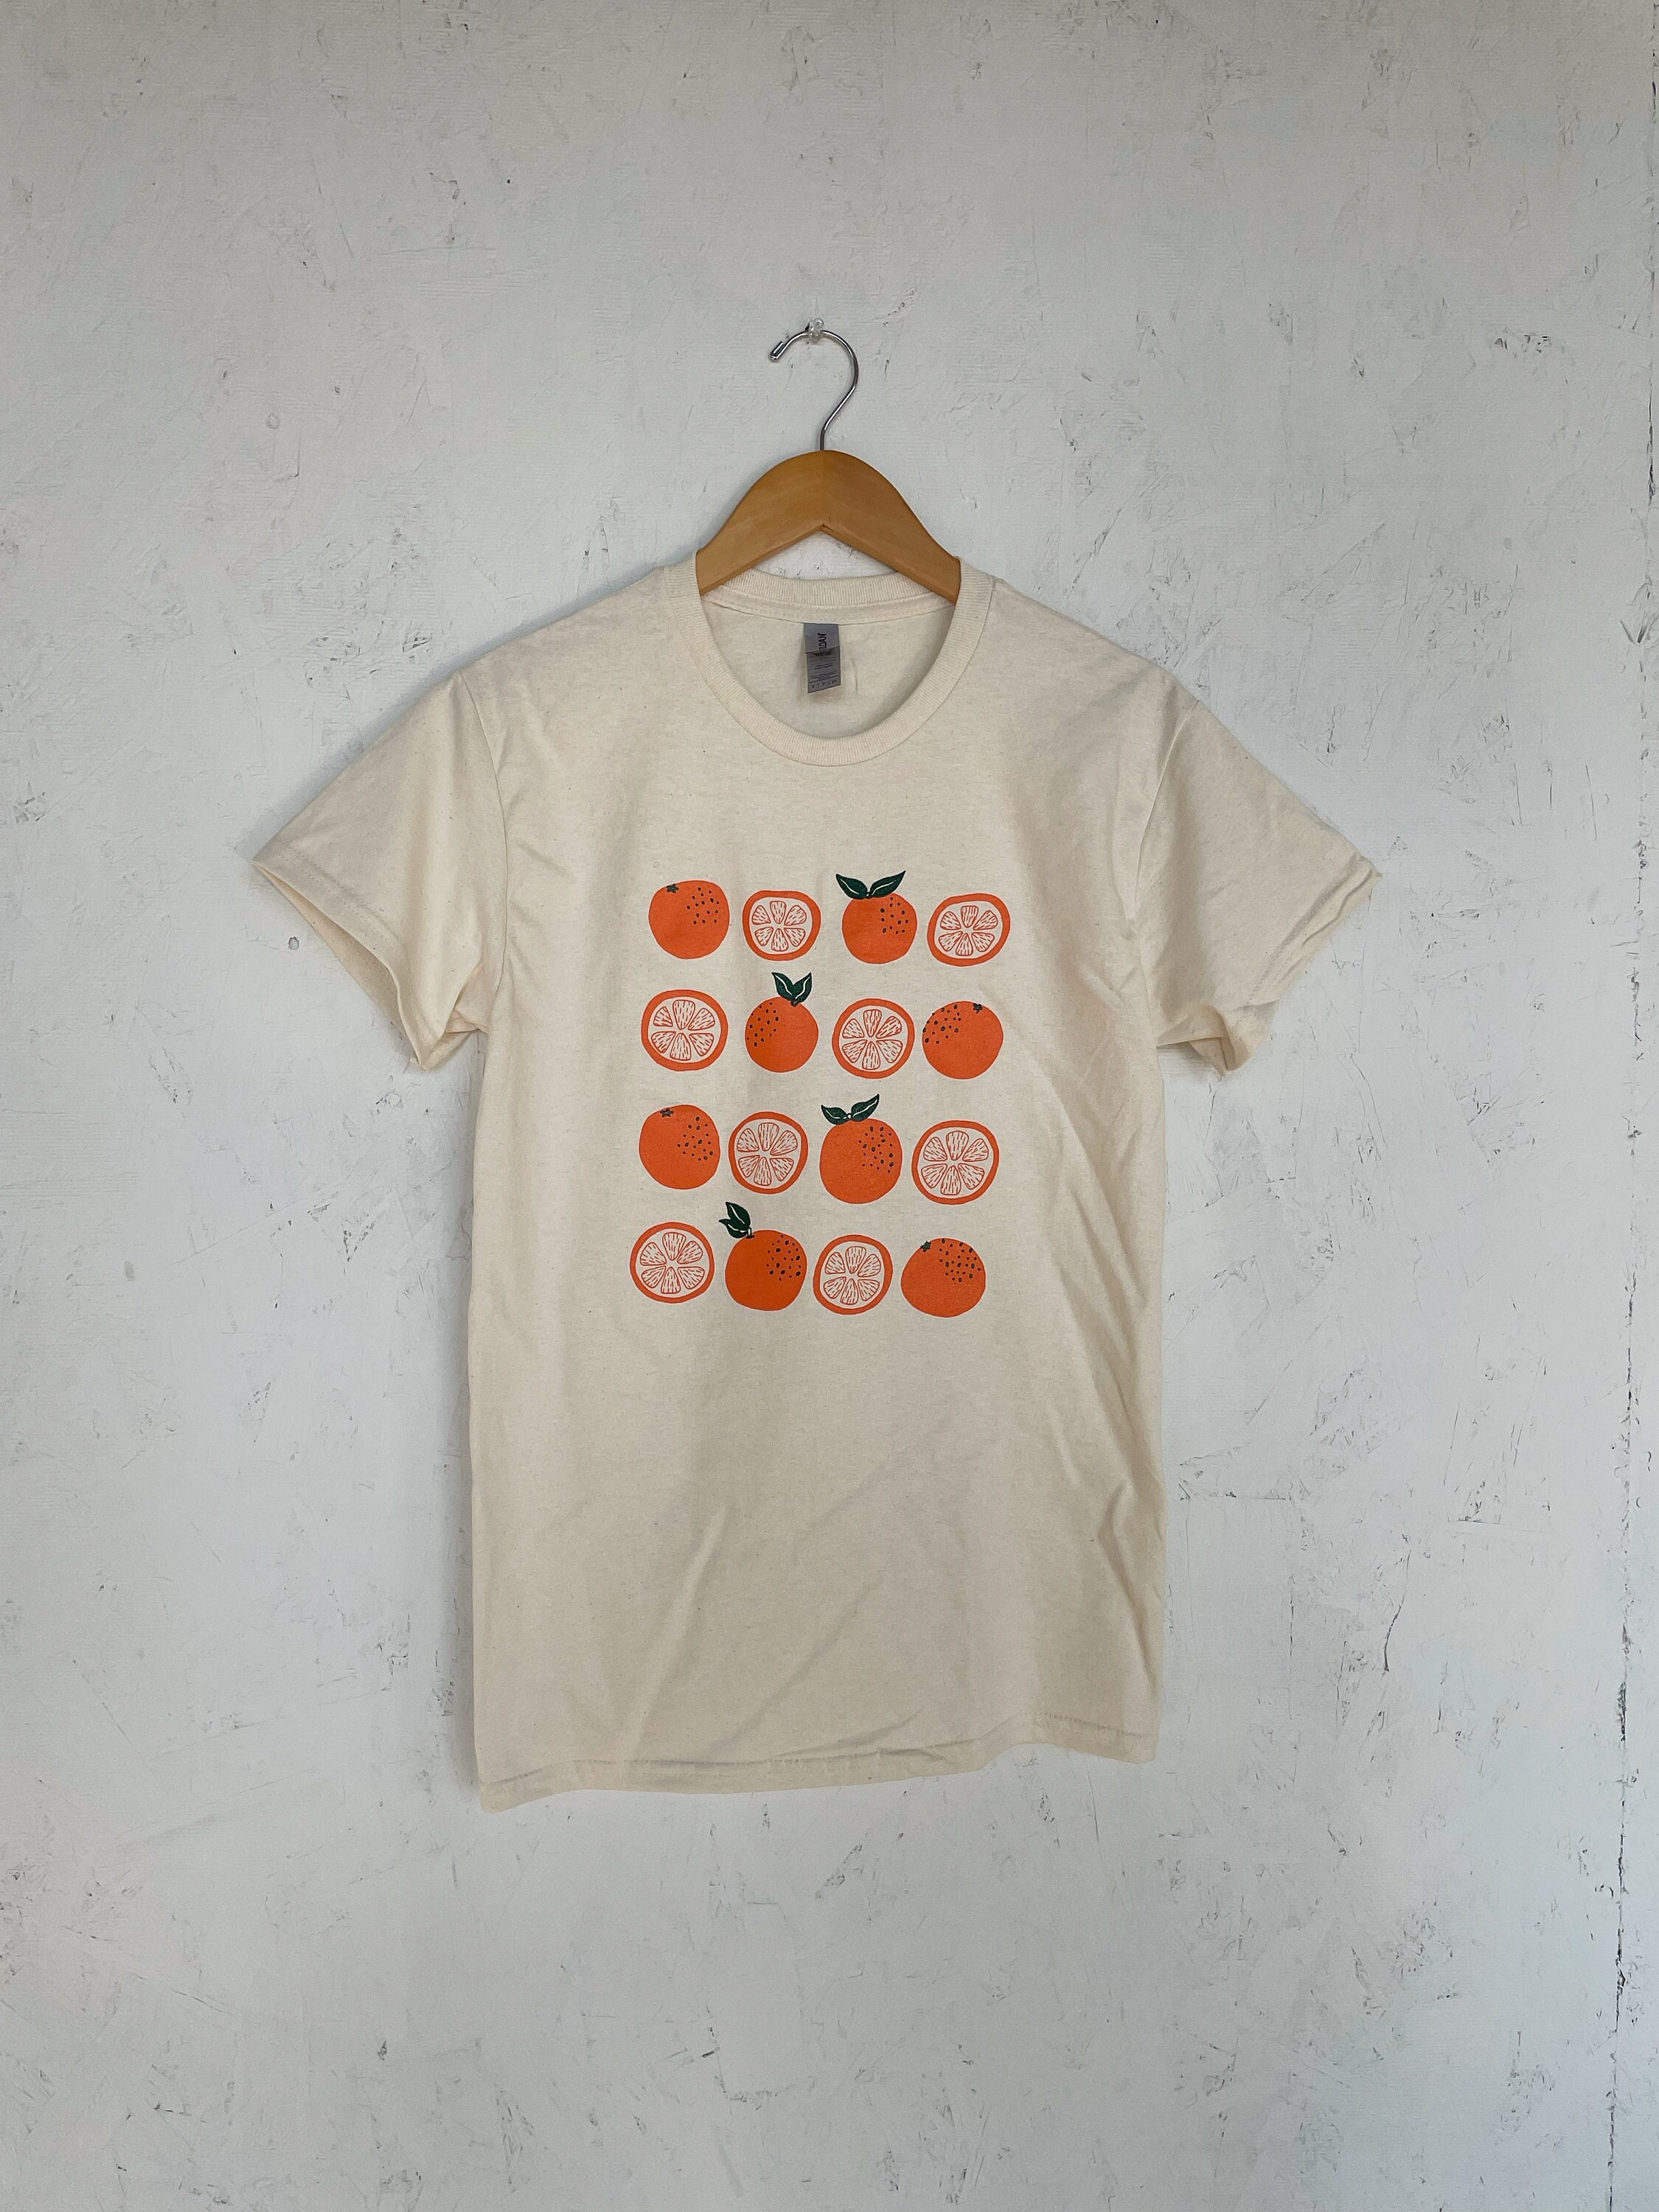 Oranges Screen Printed T shirt Garden Shirt Graphic Tee   Etsy